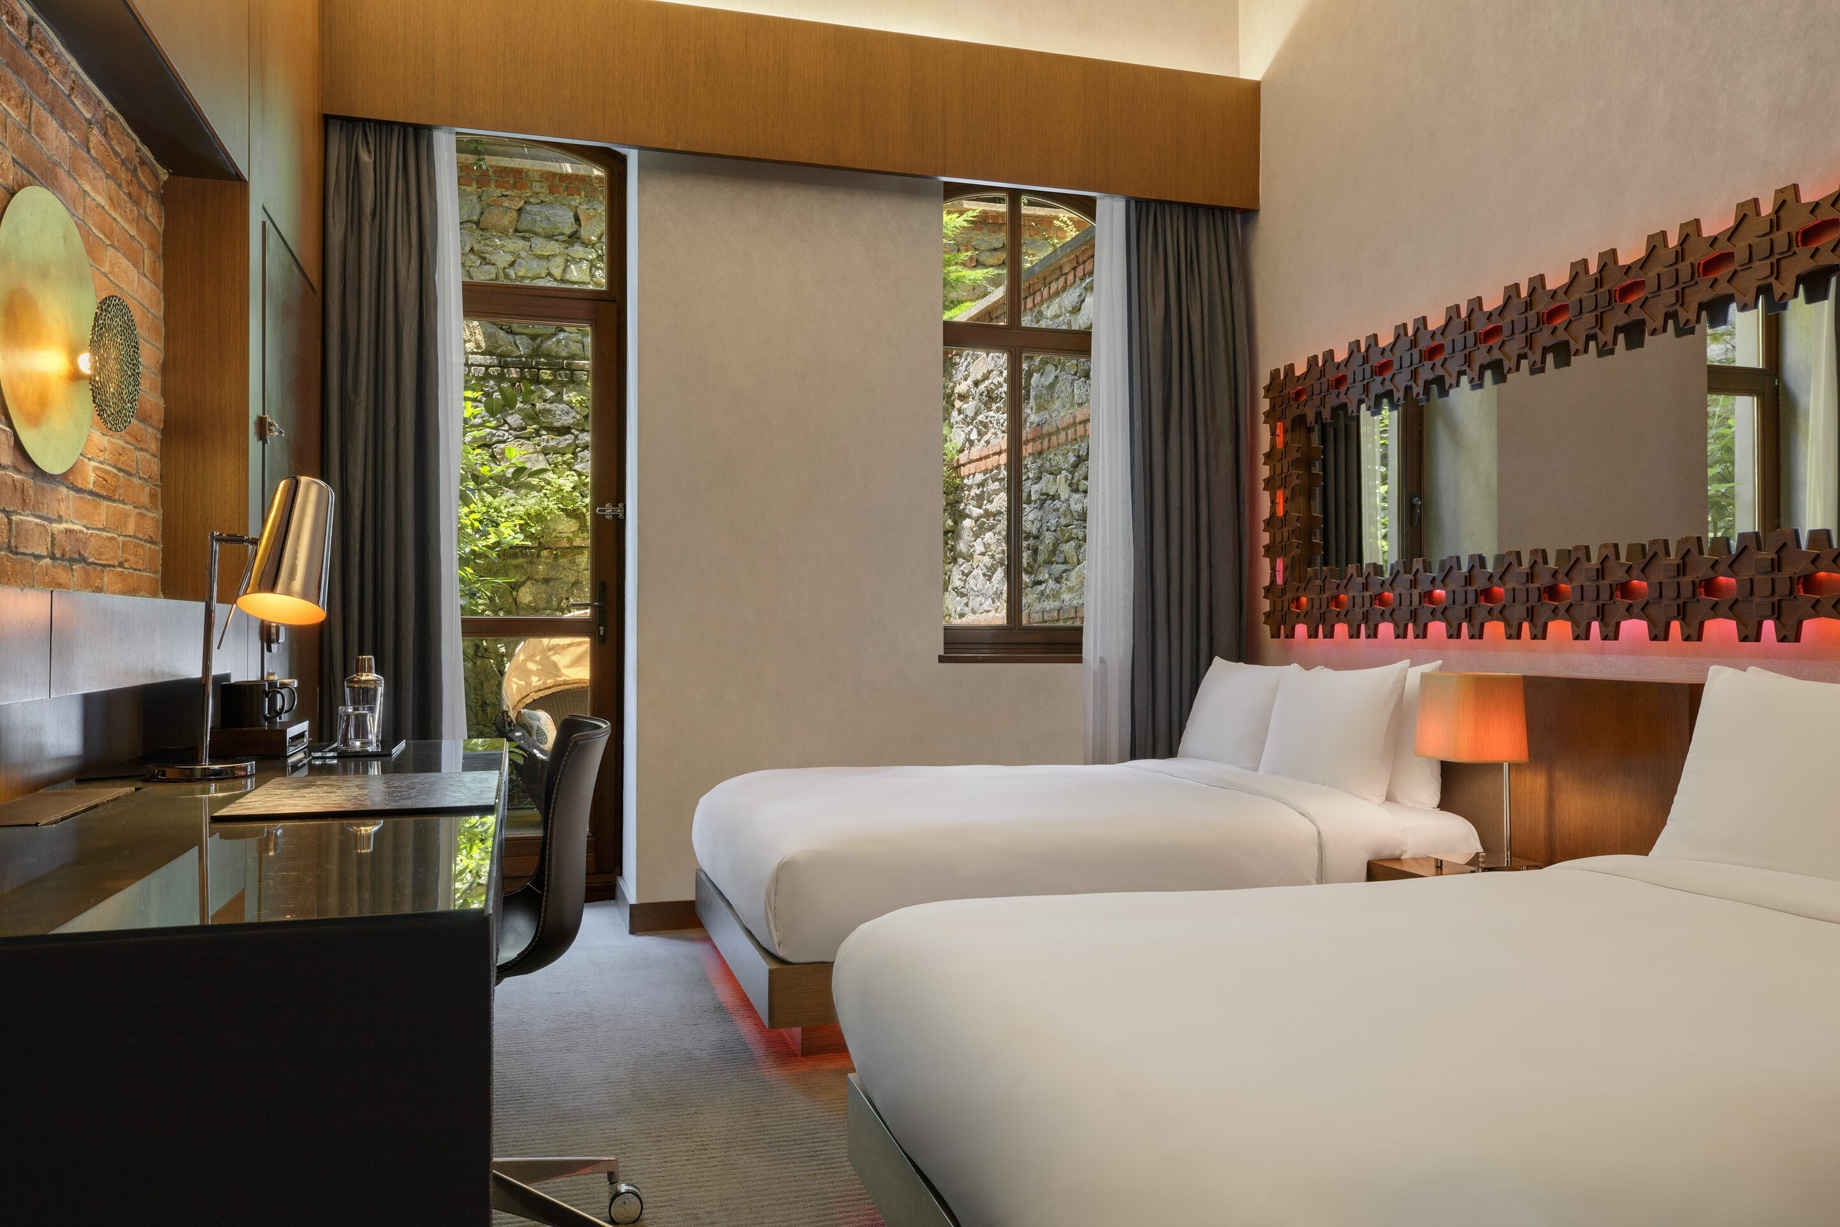 W Istanbul Hotel – Istanbul, Turkey – Spectacular Guest Room Twin